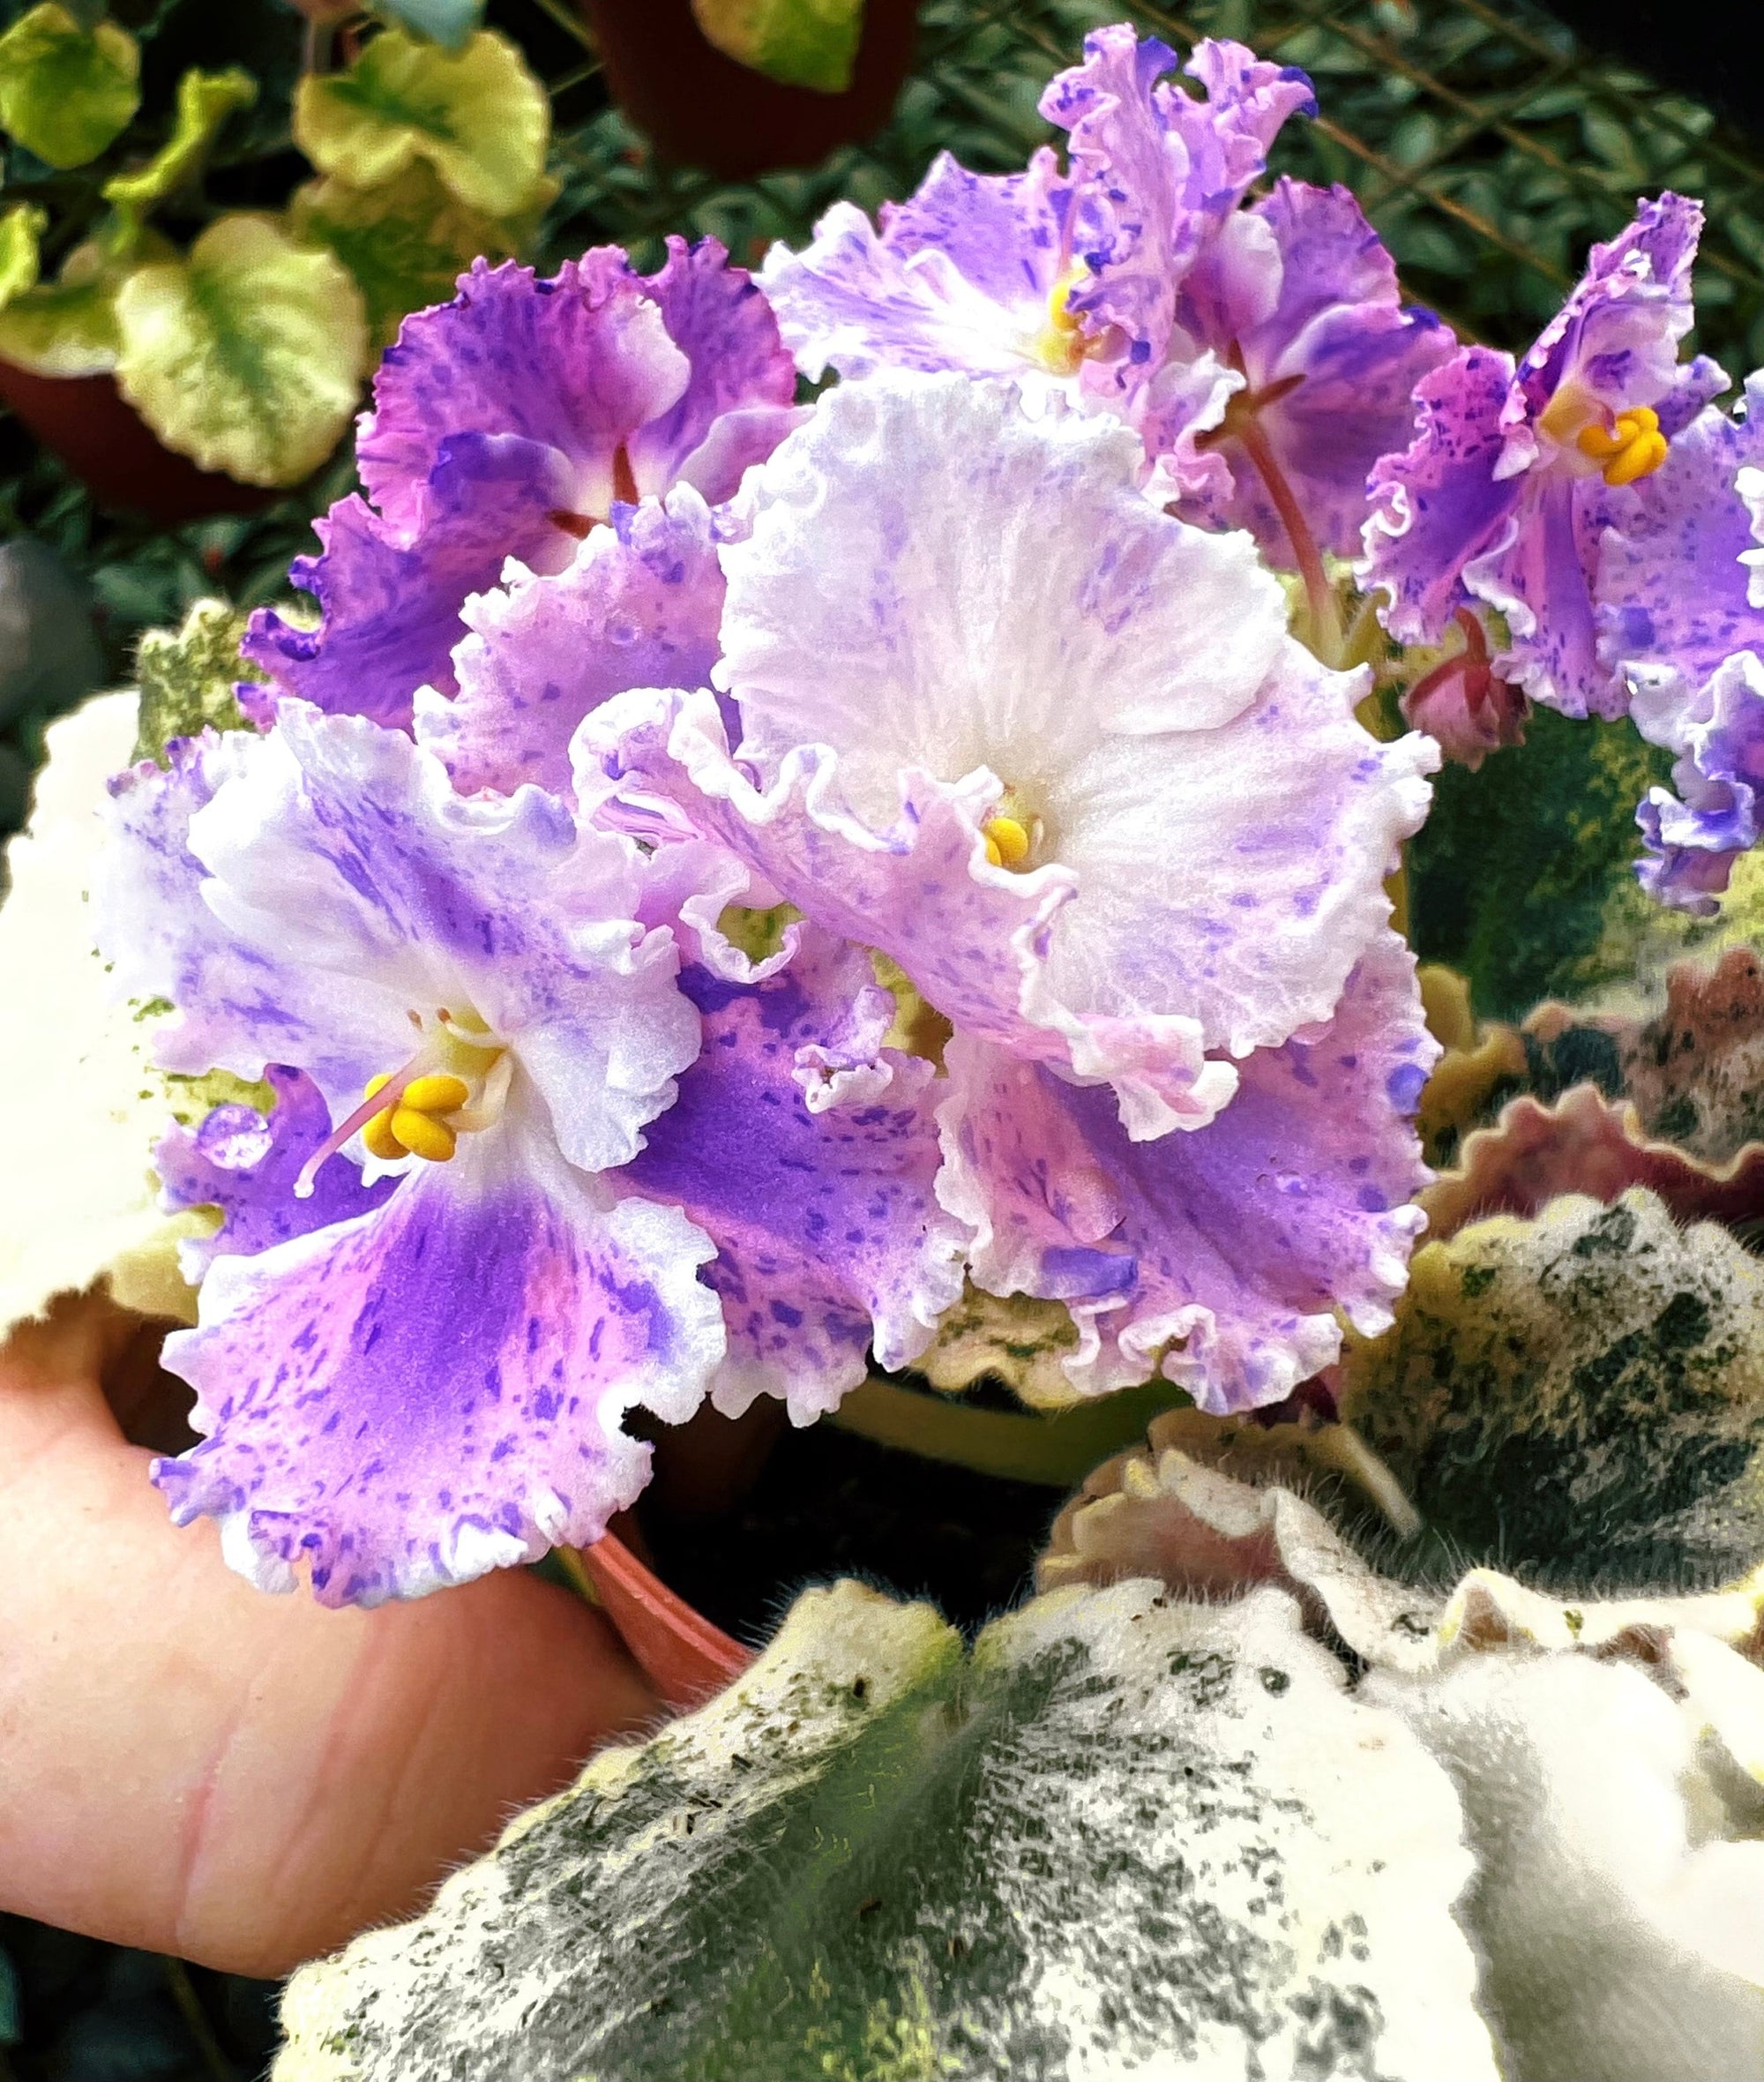 Live house plant variegated fantasy bloom African Violet Harmonys Love Bug garden 4 flower Potted gift